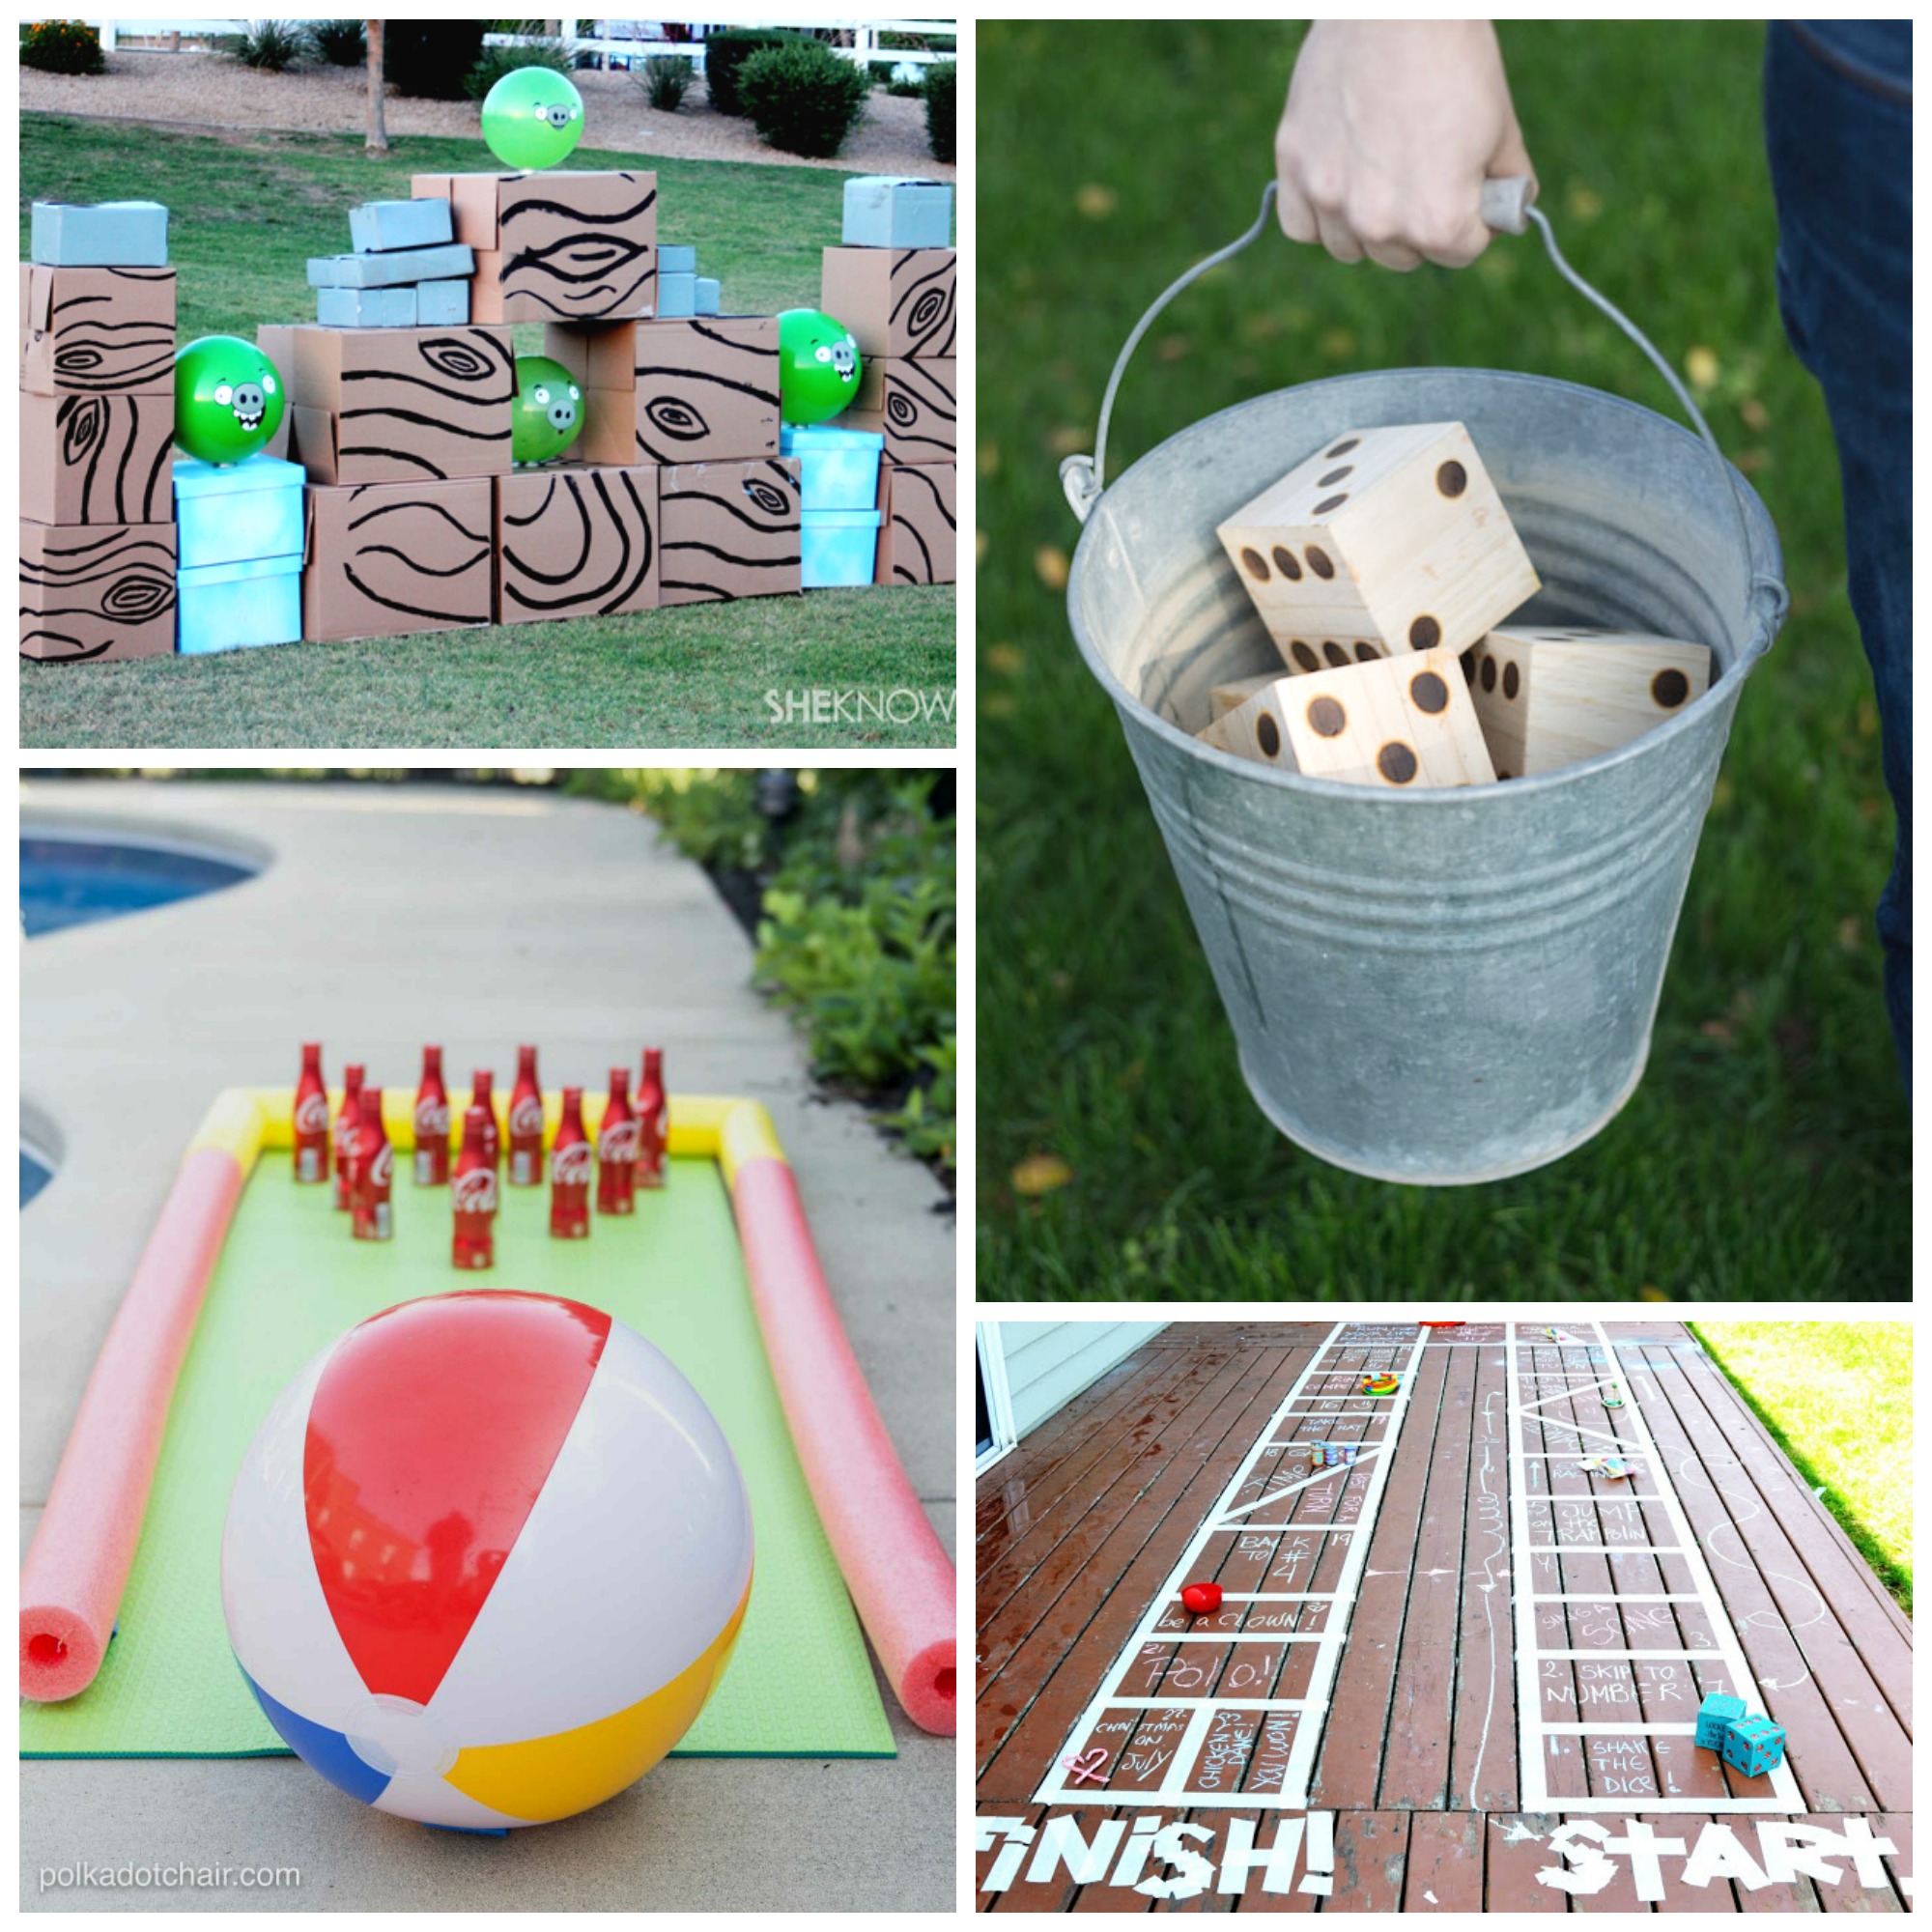 15 Diy Lawn Games To Make Make And Takes